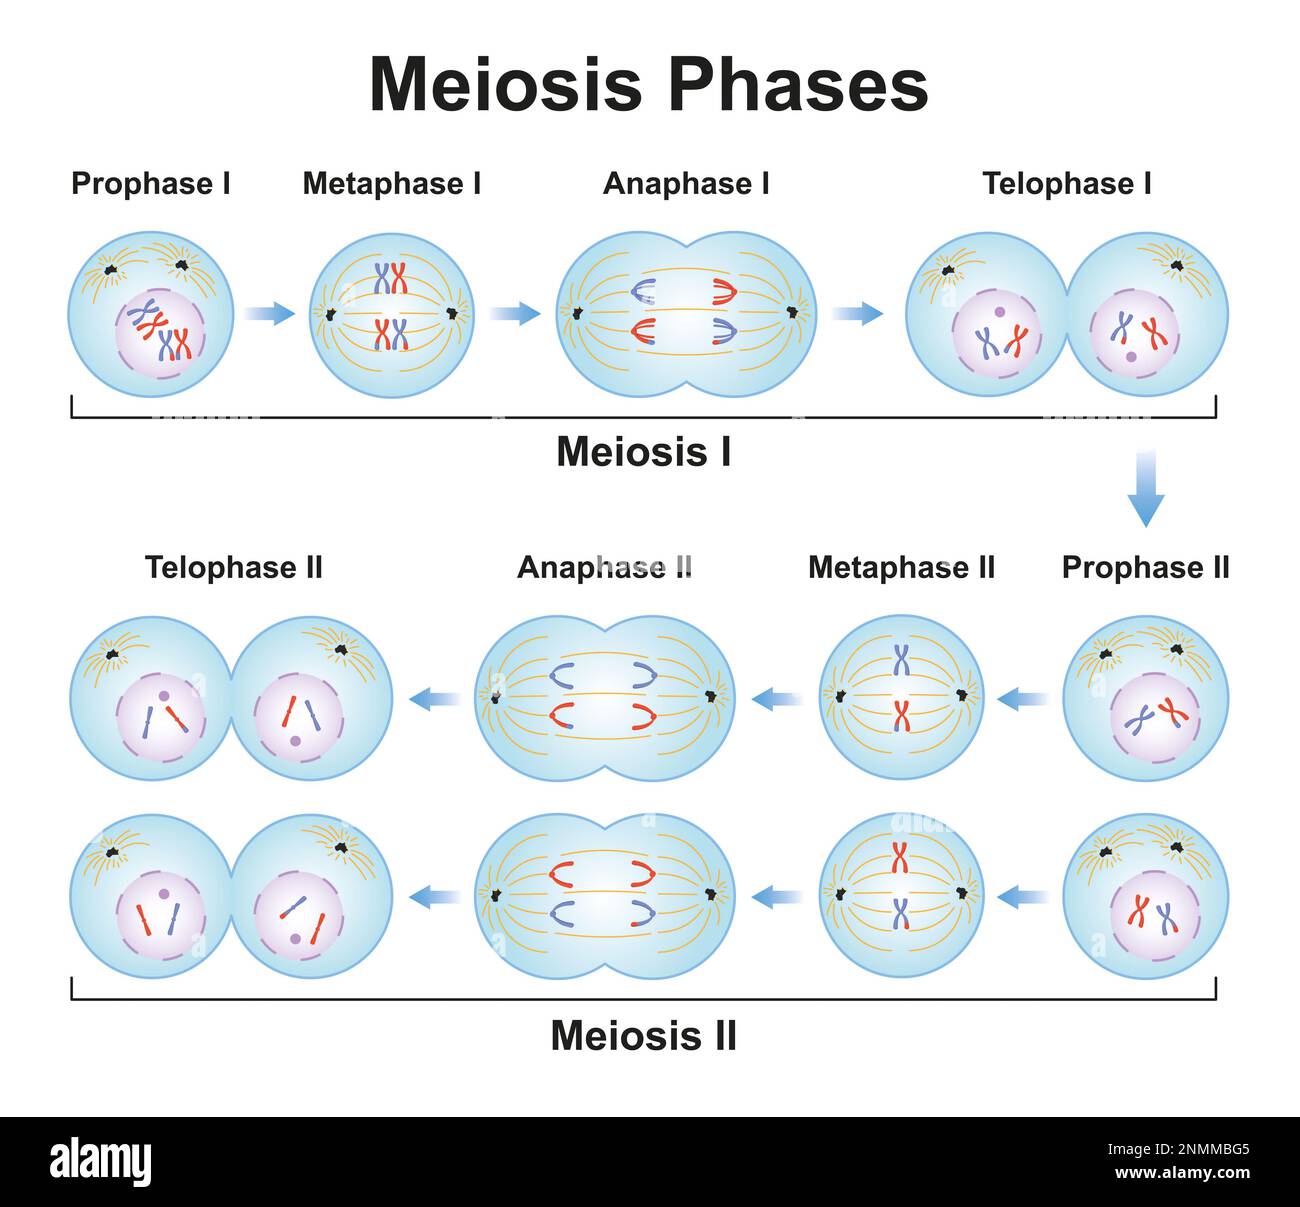 Meiosis phases, illustration Stock Photo - Alamy